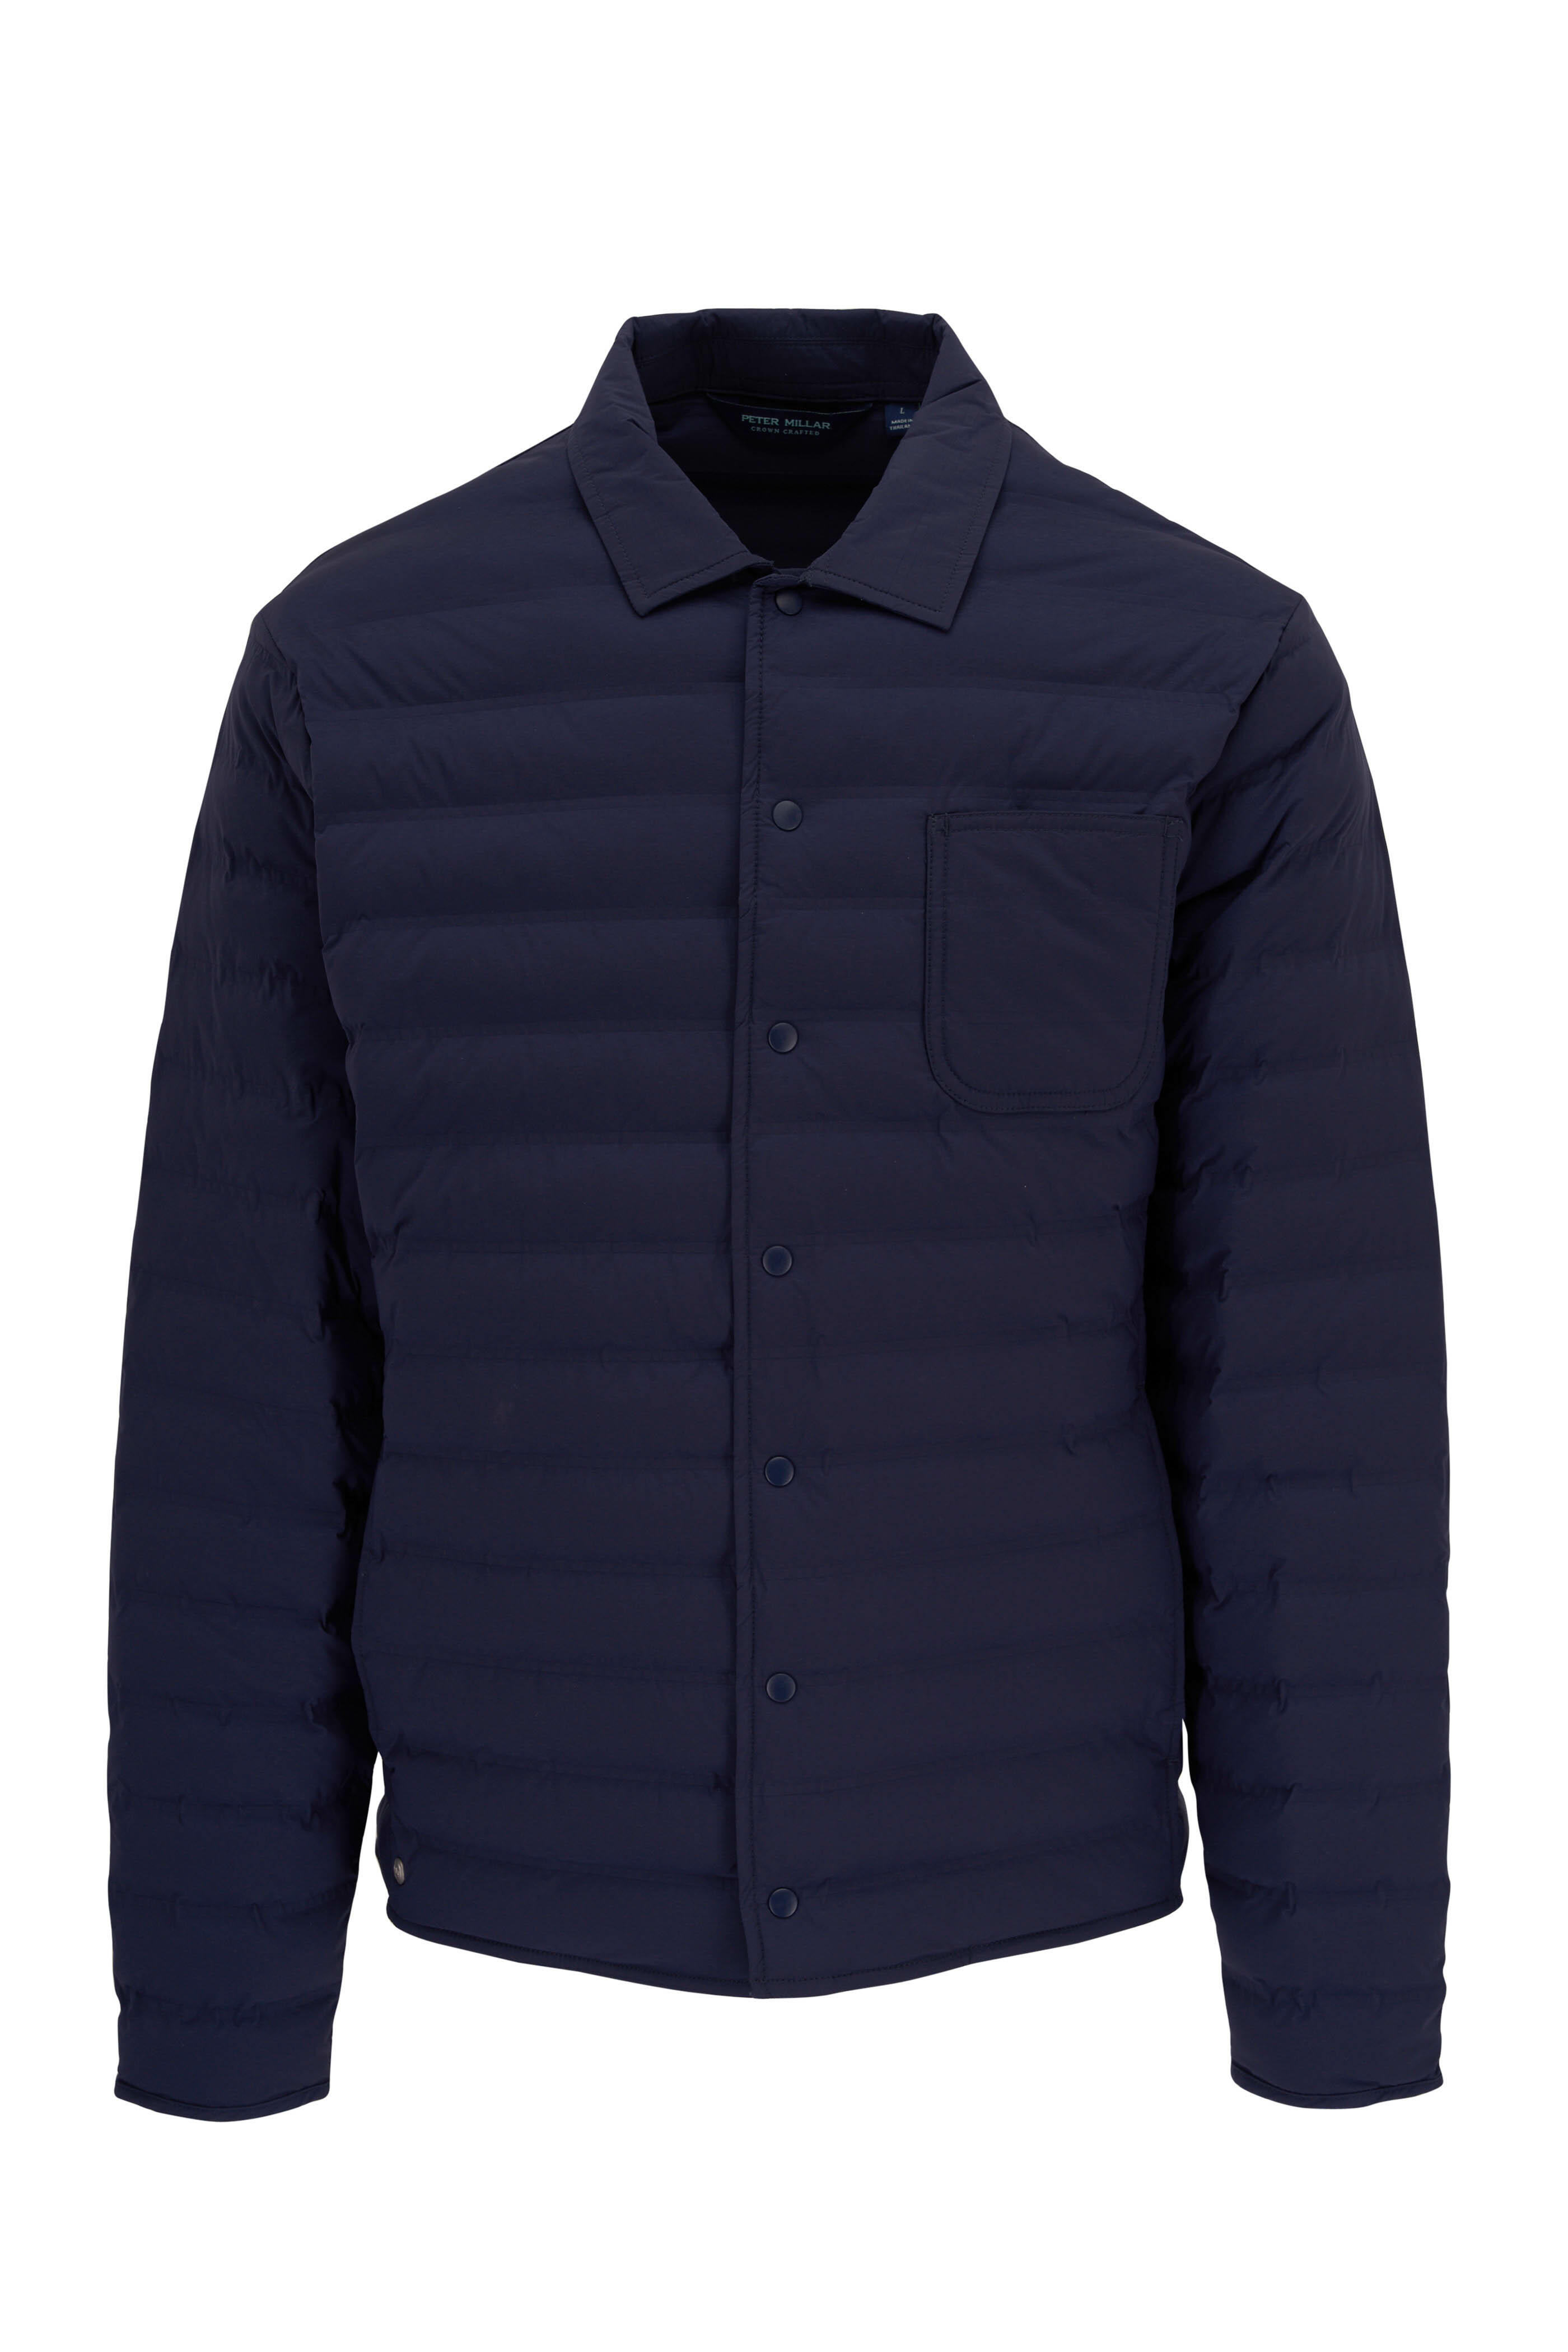 Peter Millar - Apex Navy Snap Button Jacket | Mitchell Stores